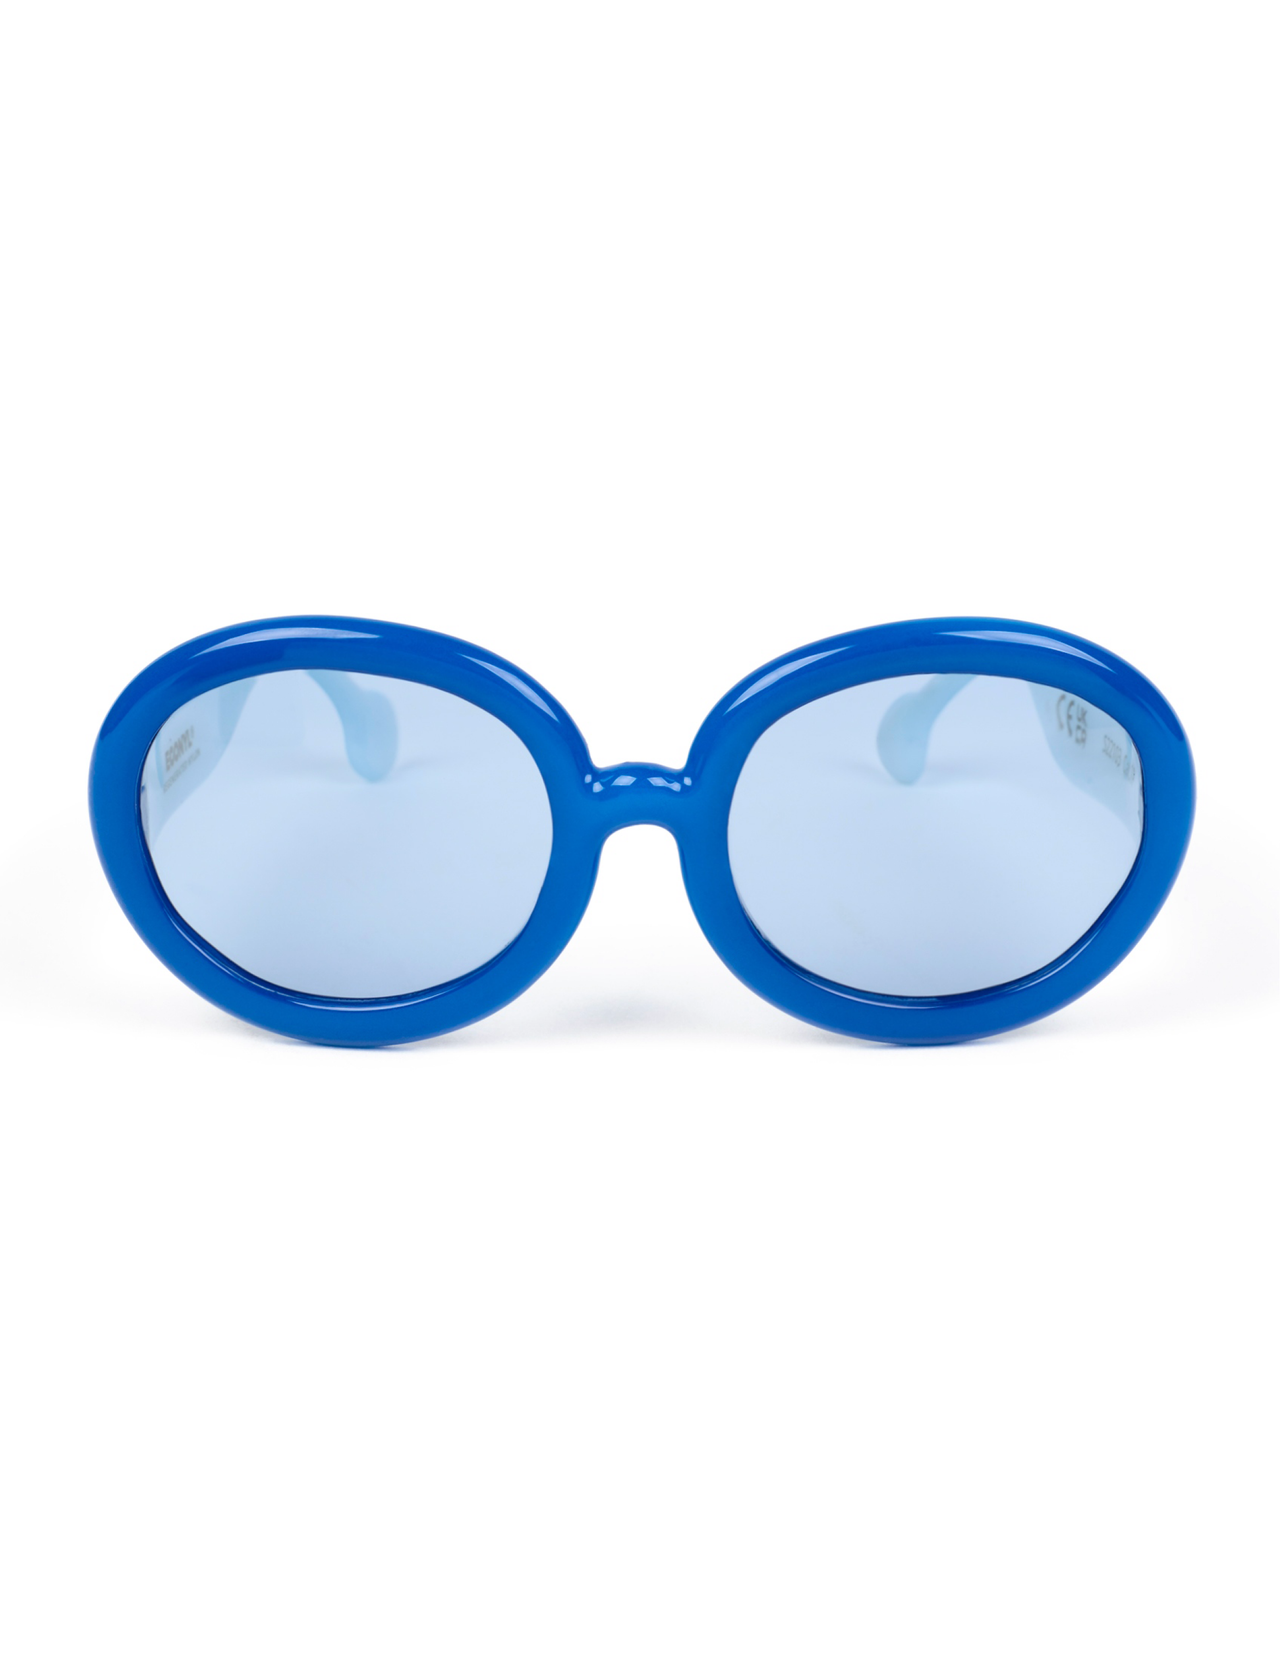 The Animals Observatory - Blue Circular Sunglasses